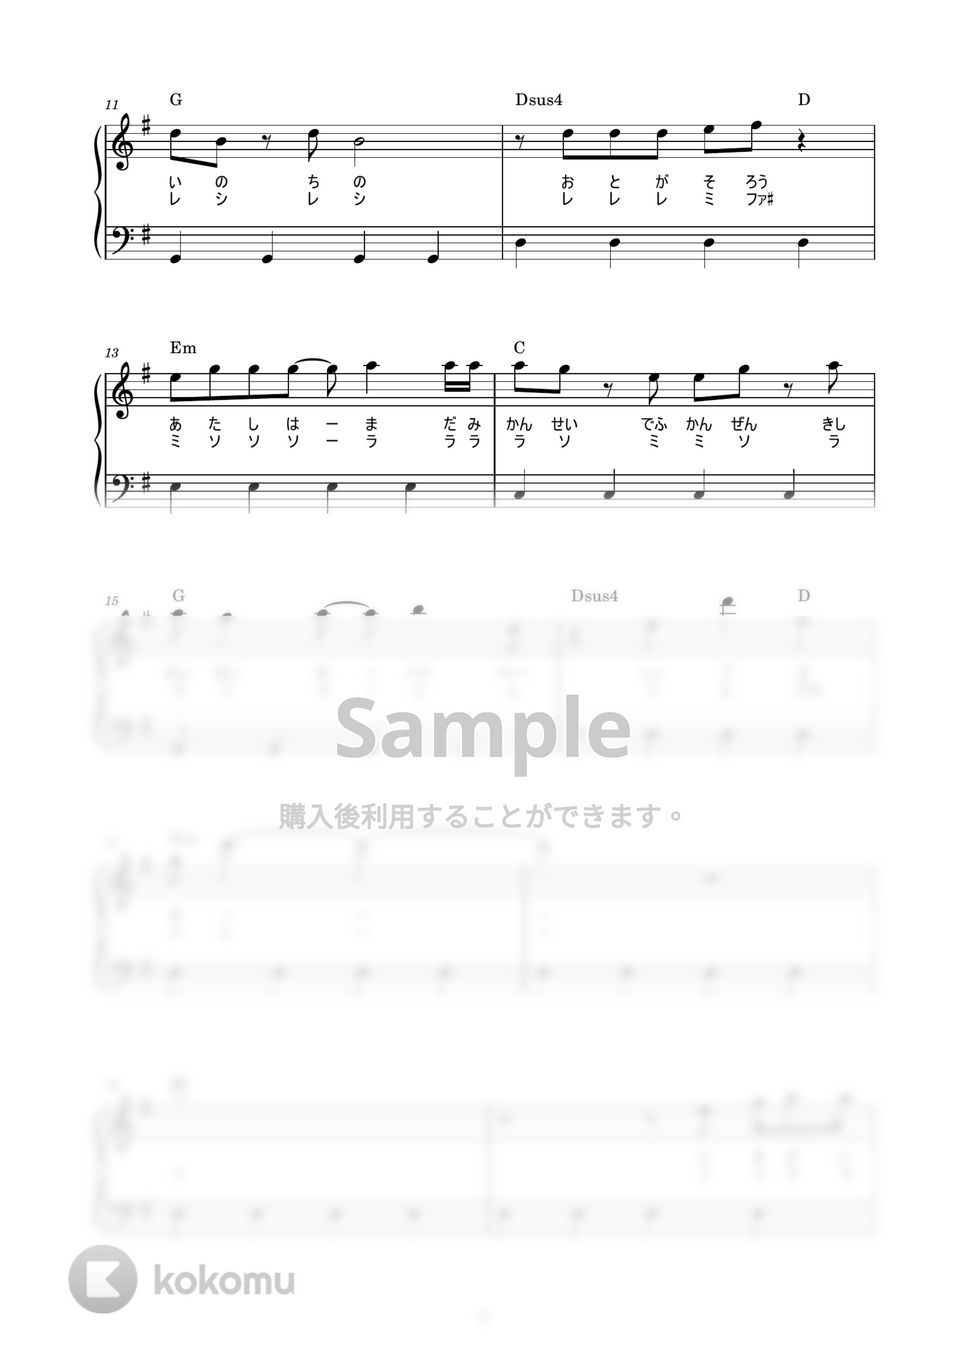 Reol - 第六感 (かんたん / 歌詞付き / ドレミ付き / 初心者) by piano.tokyo